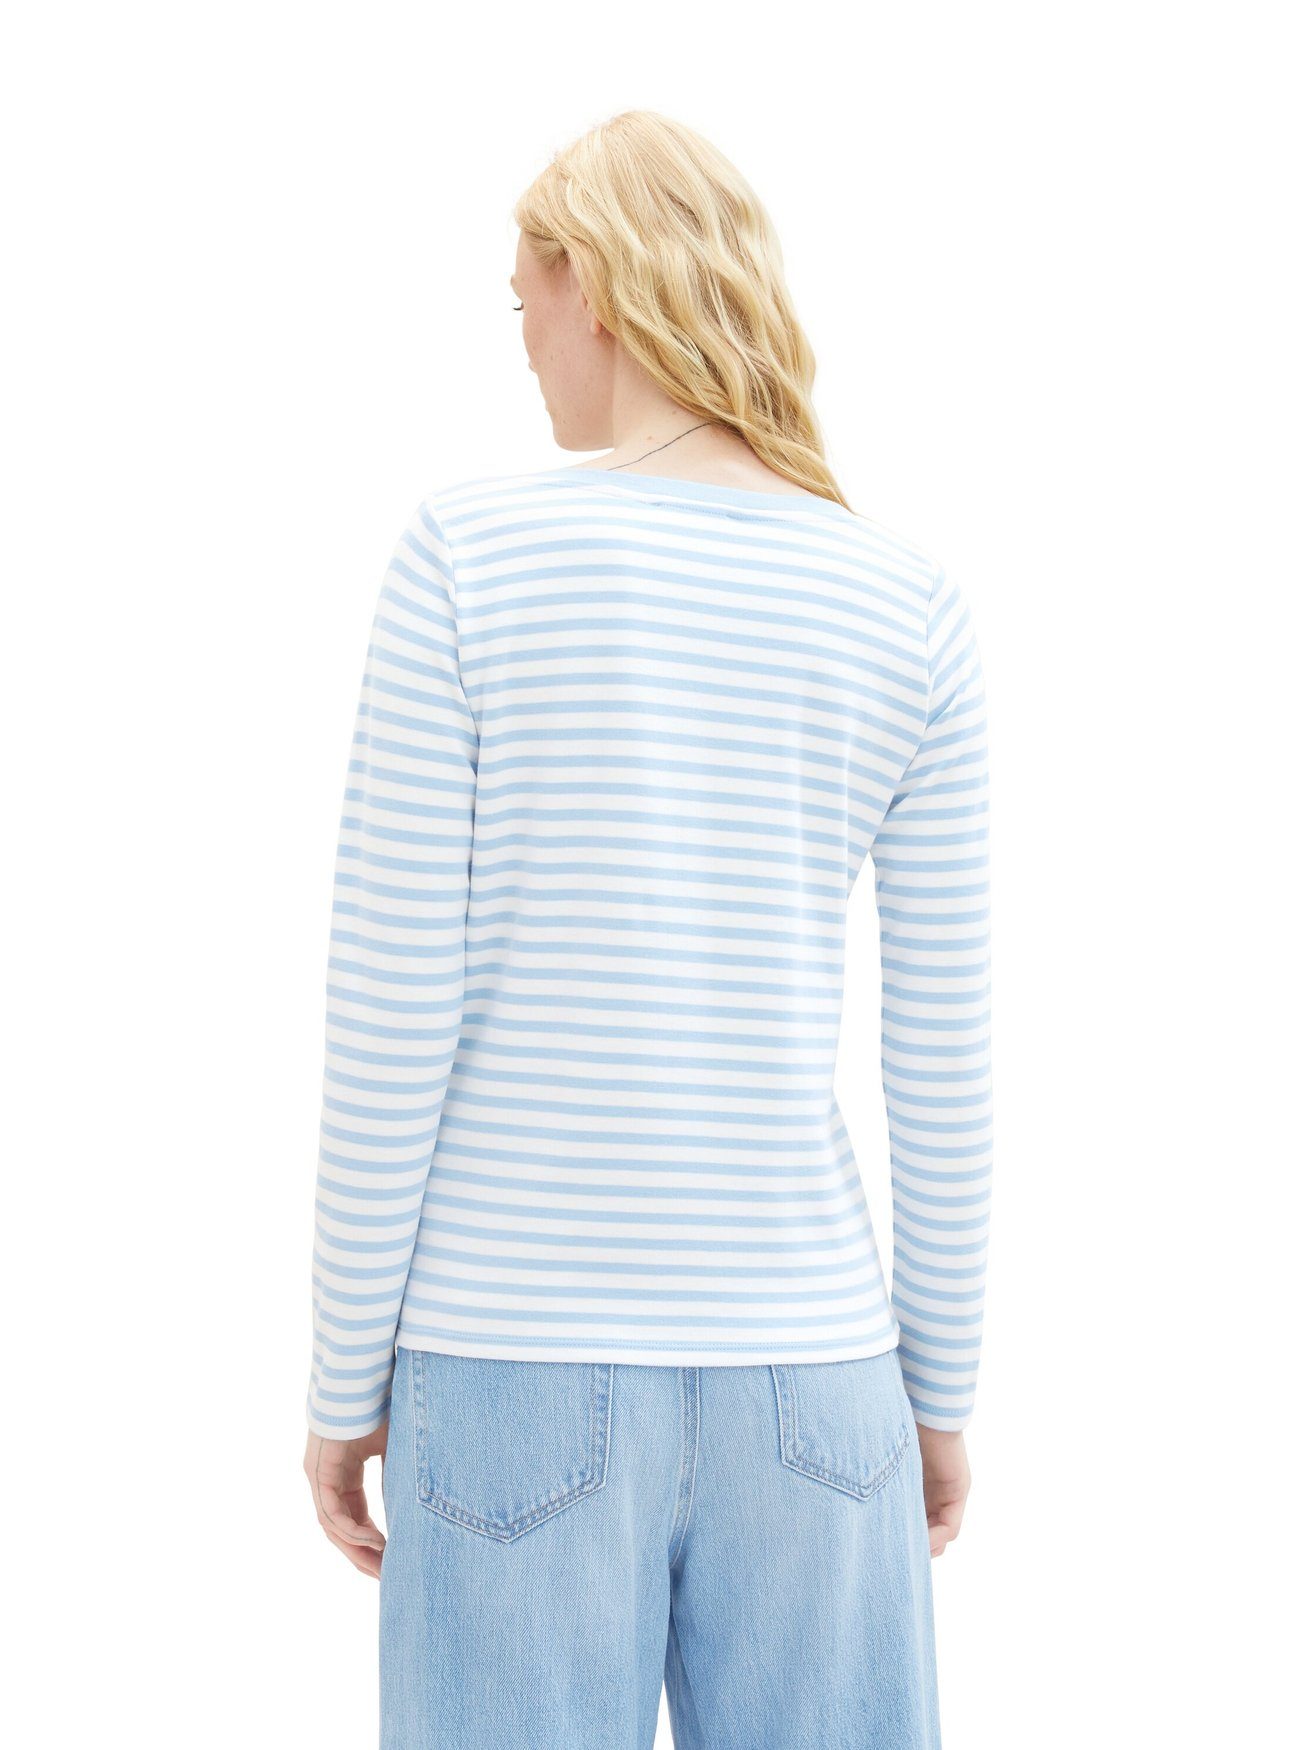 Basic in Gestreiftes Langarm T-Shirt Blau 6287 TOM TAILOR Shirt Pullover